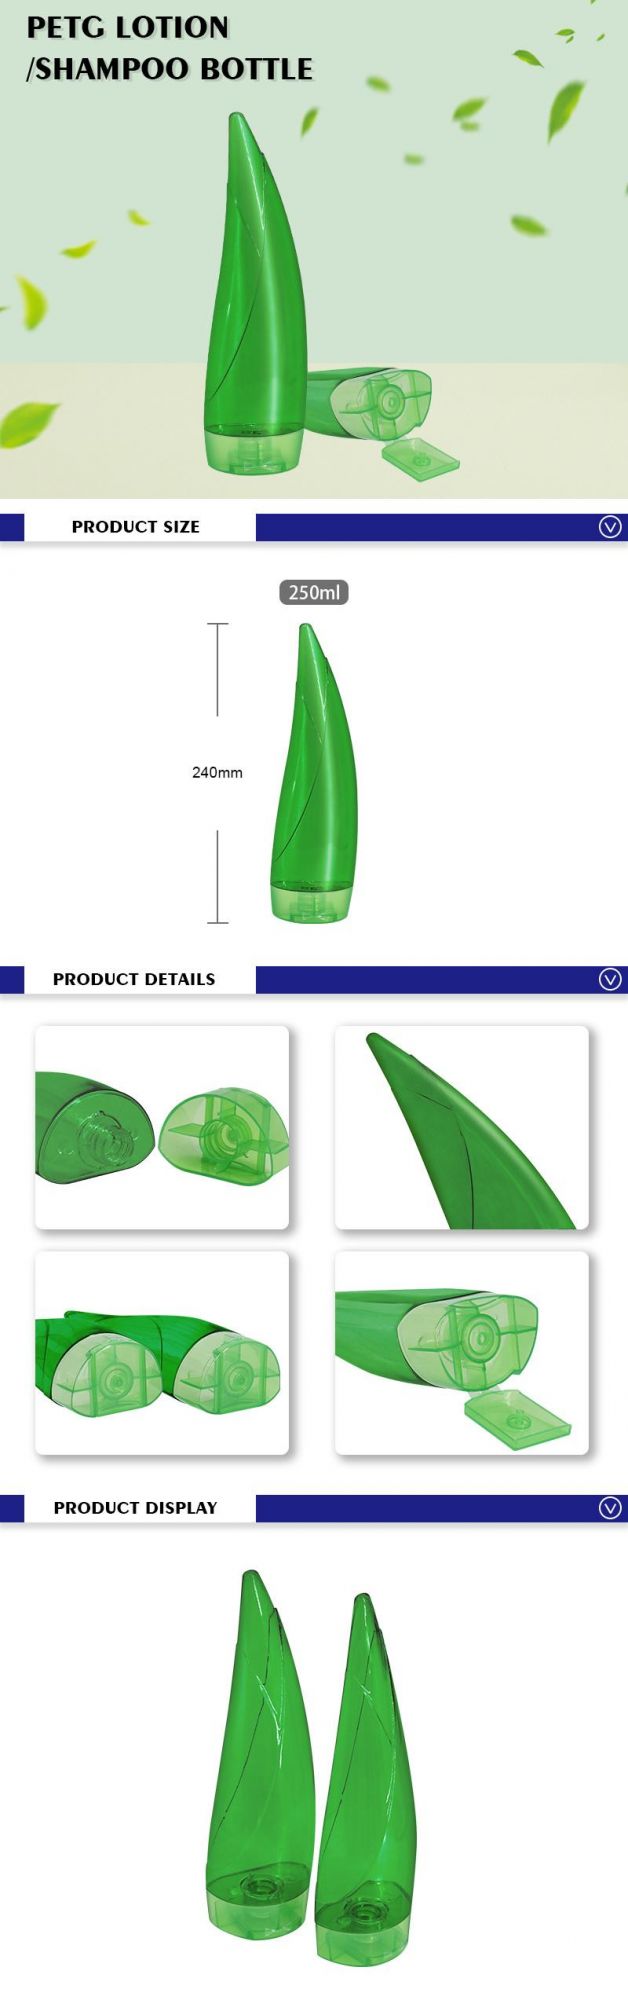 Customized Green 250ml PETG Lotion Empty Shampoo Bottles